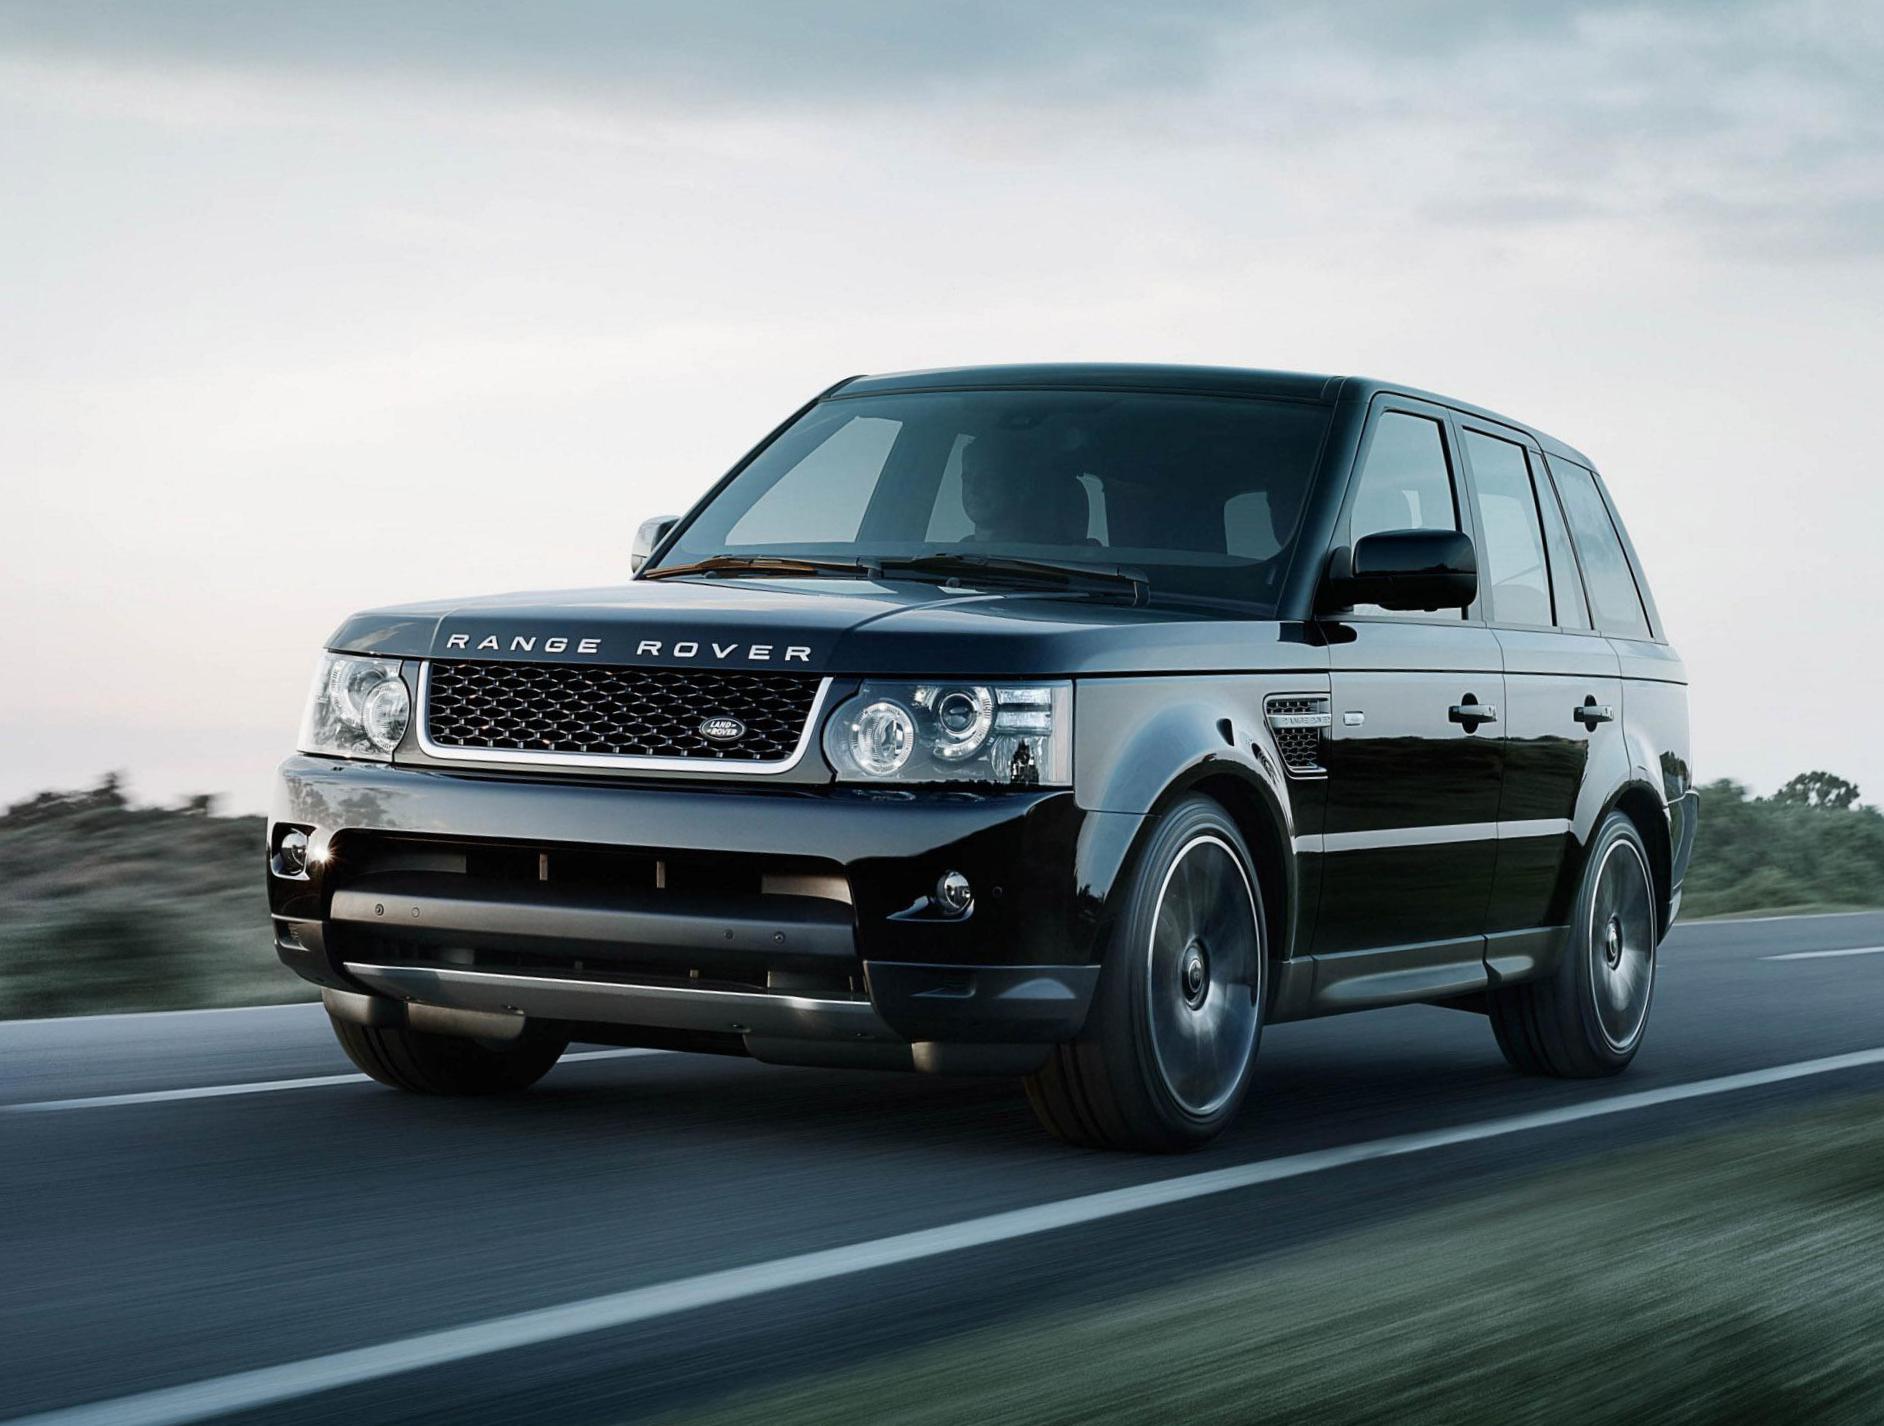 Range Rover Land Rover configuration suv